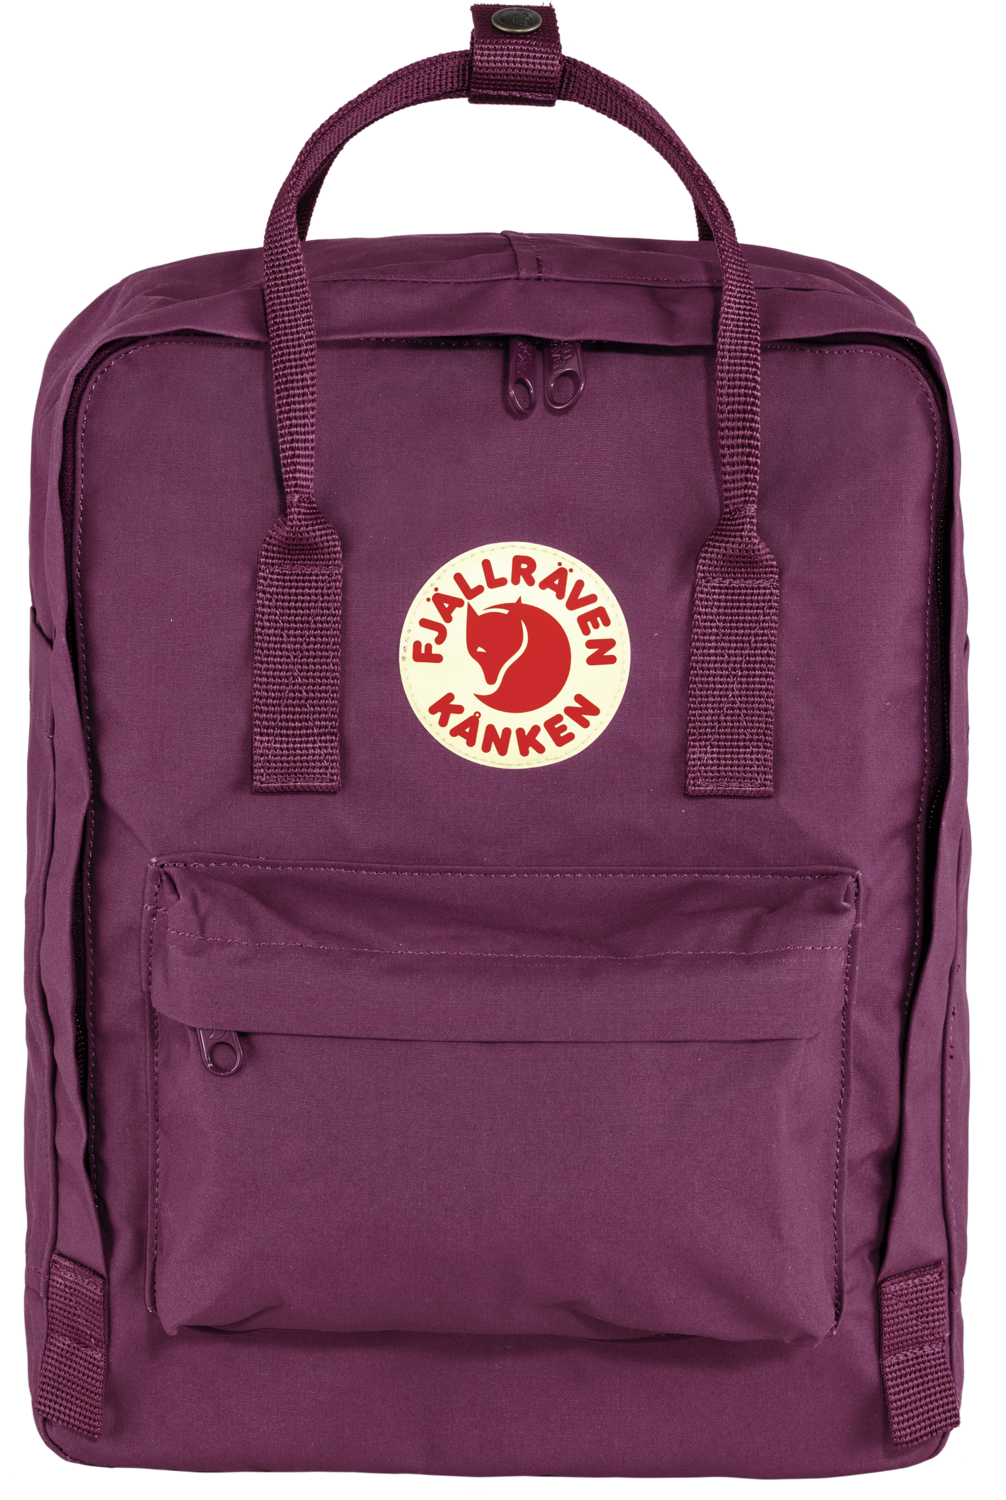 Fjallraven Kanken Backpack - Royal Purple - Find Your Feet Australia Hobart Launceston Tasmania